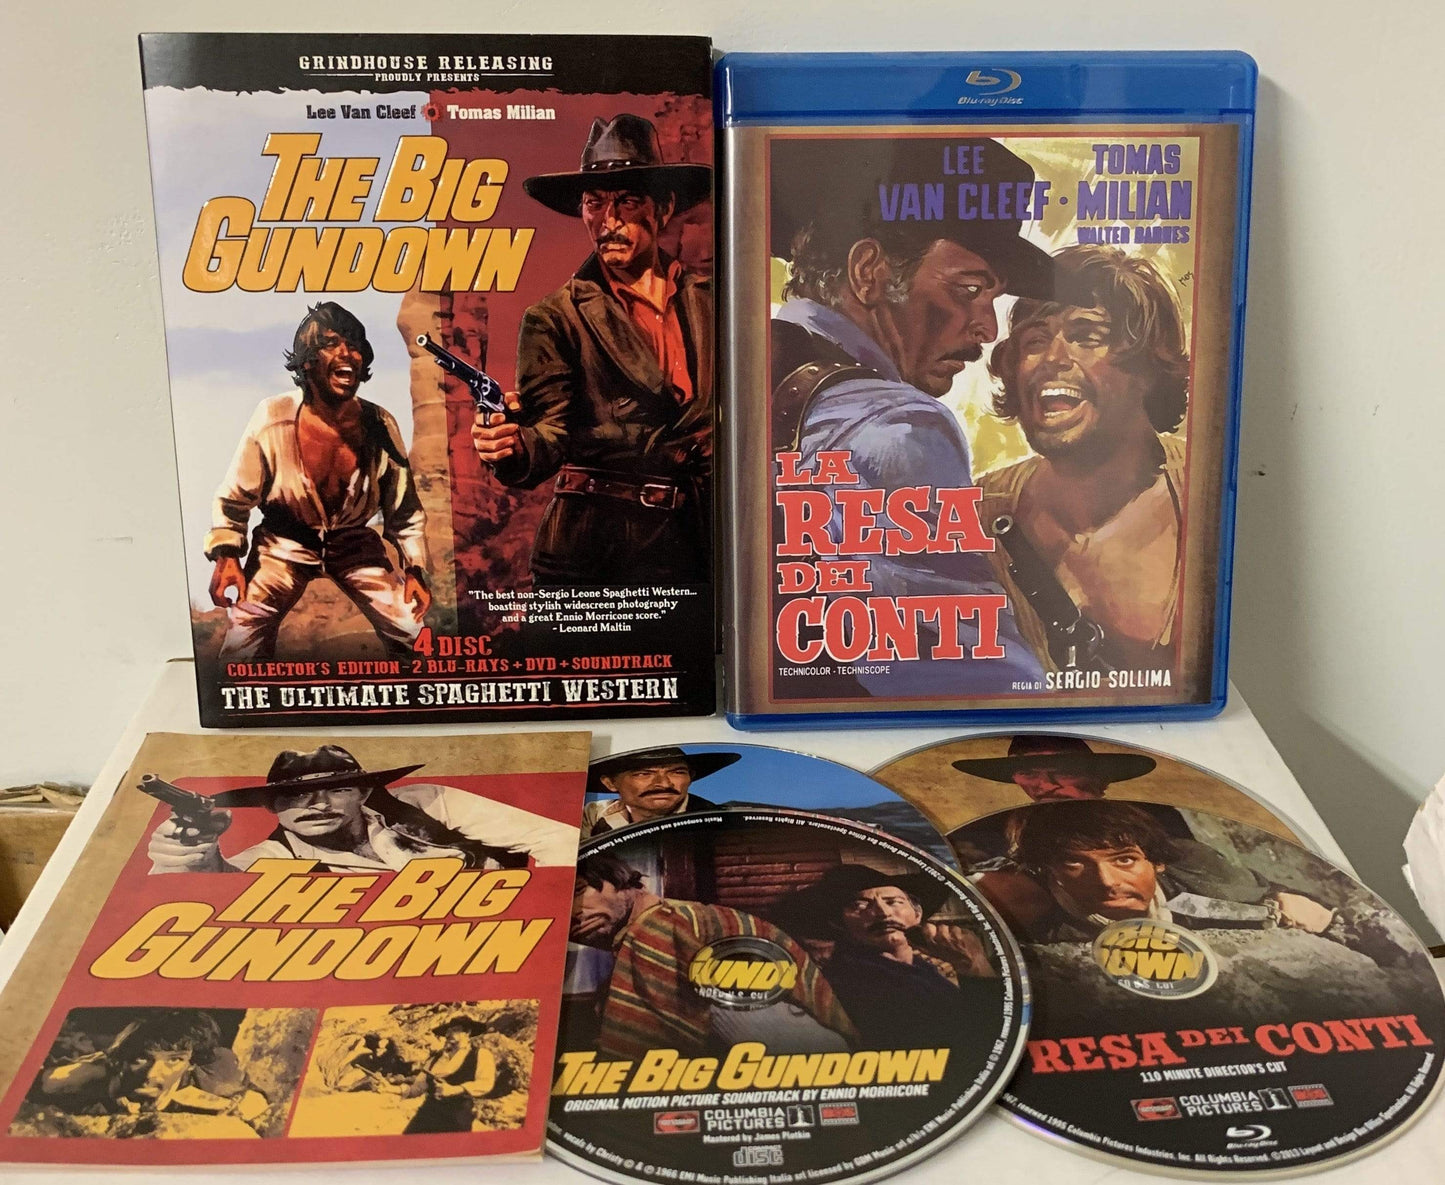 THE BIG GUNDOWN (1966) 4 disc (2 Blu-rays + DVD + CD soundtrack) set: Embossed slipcover